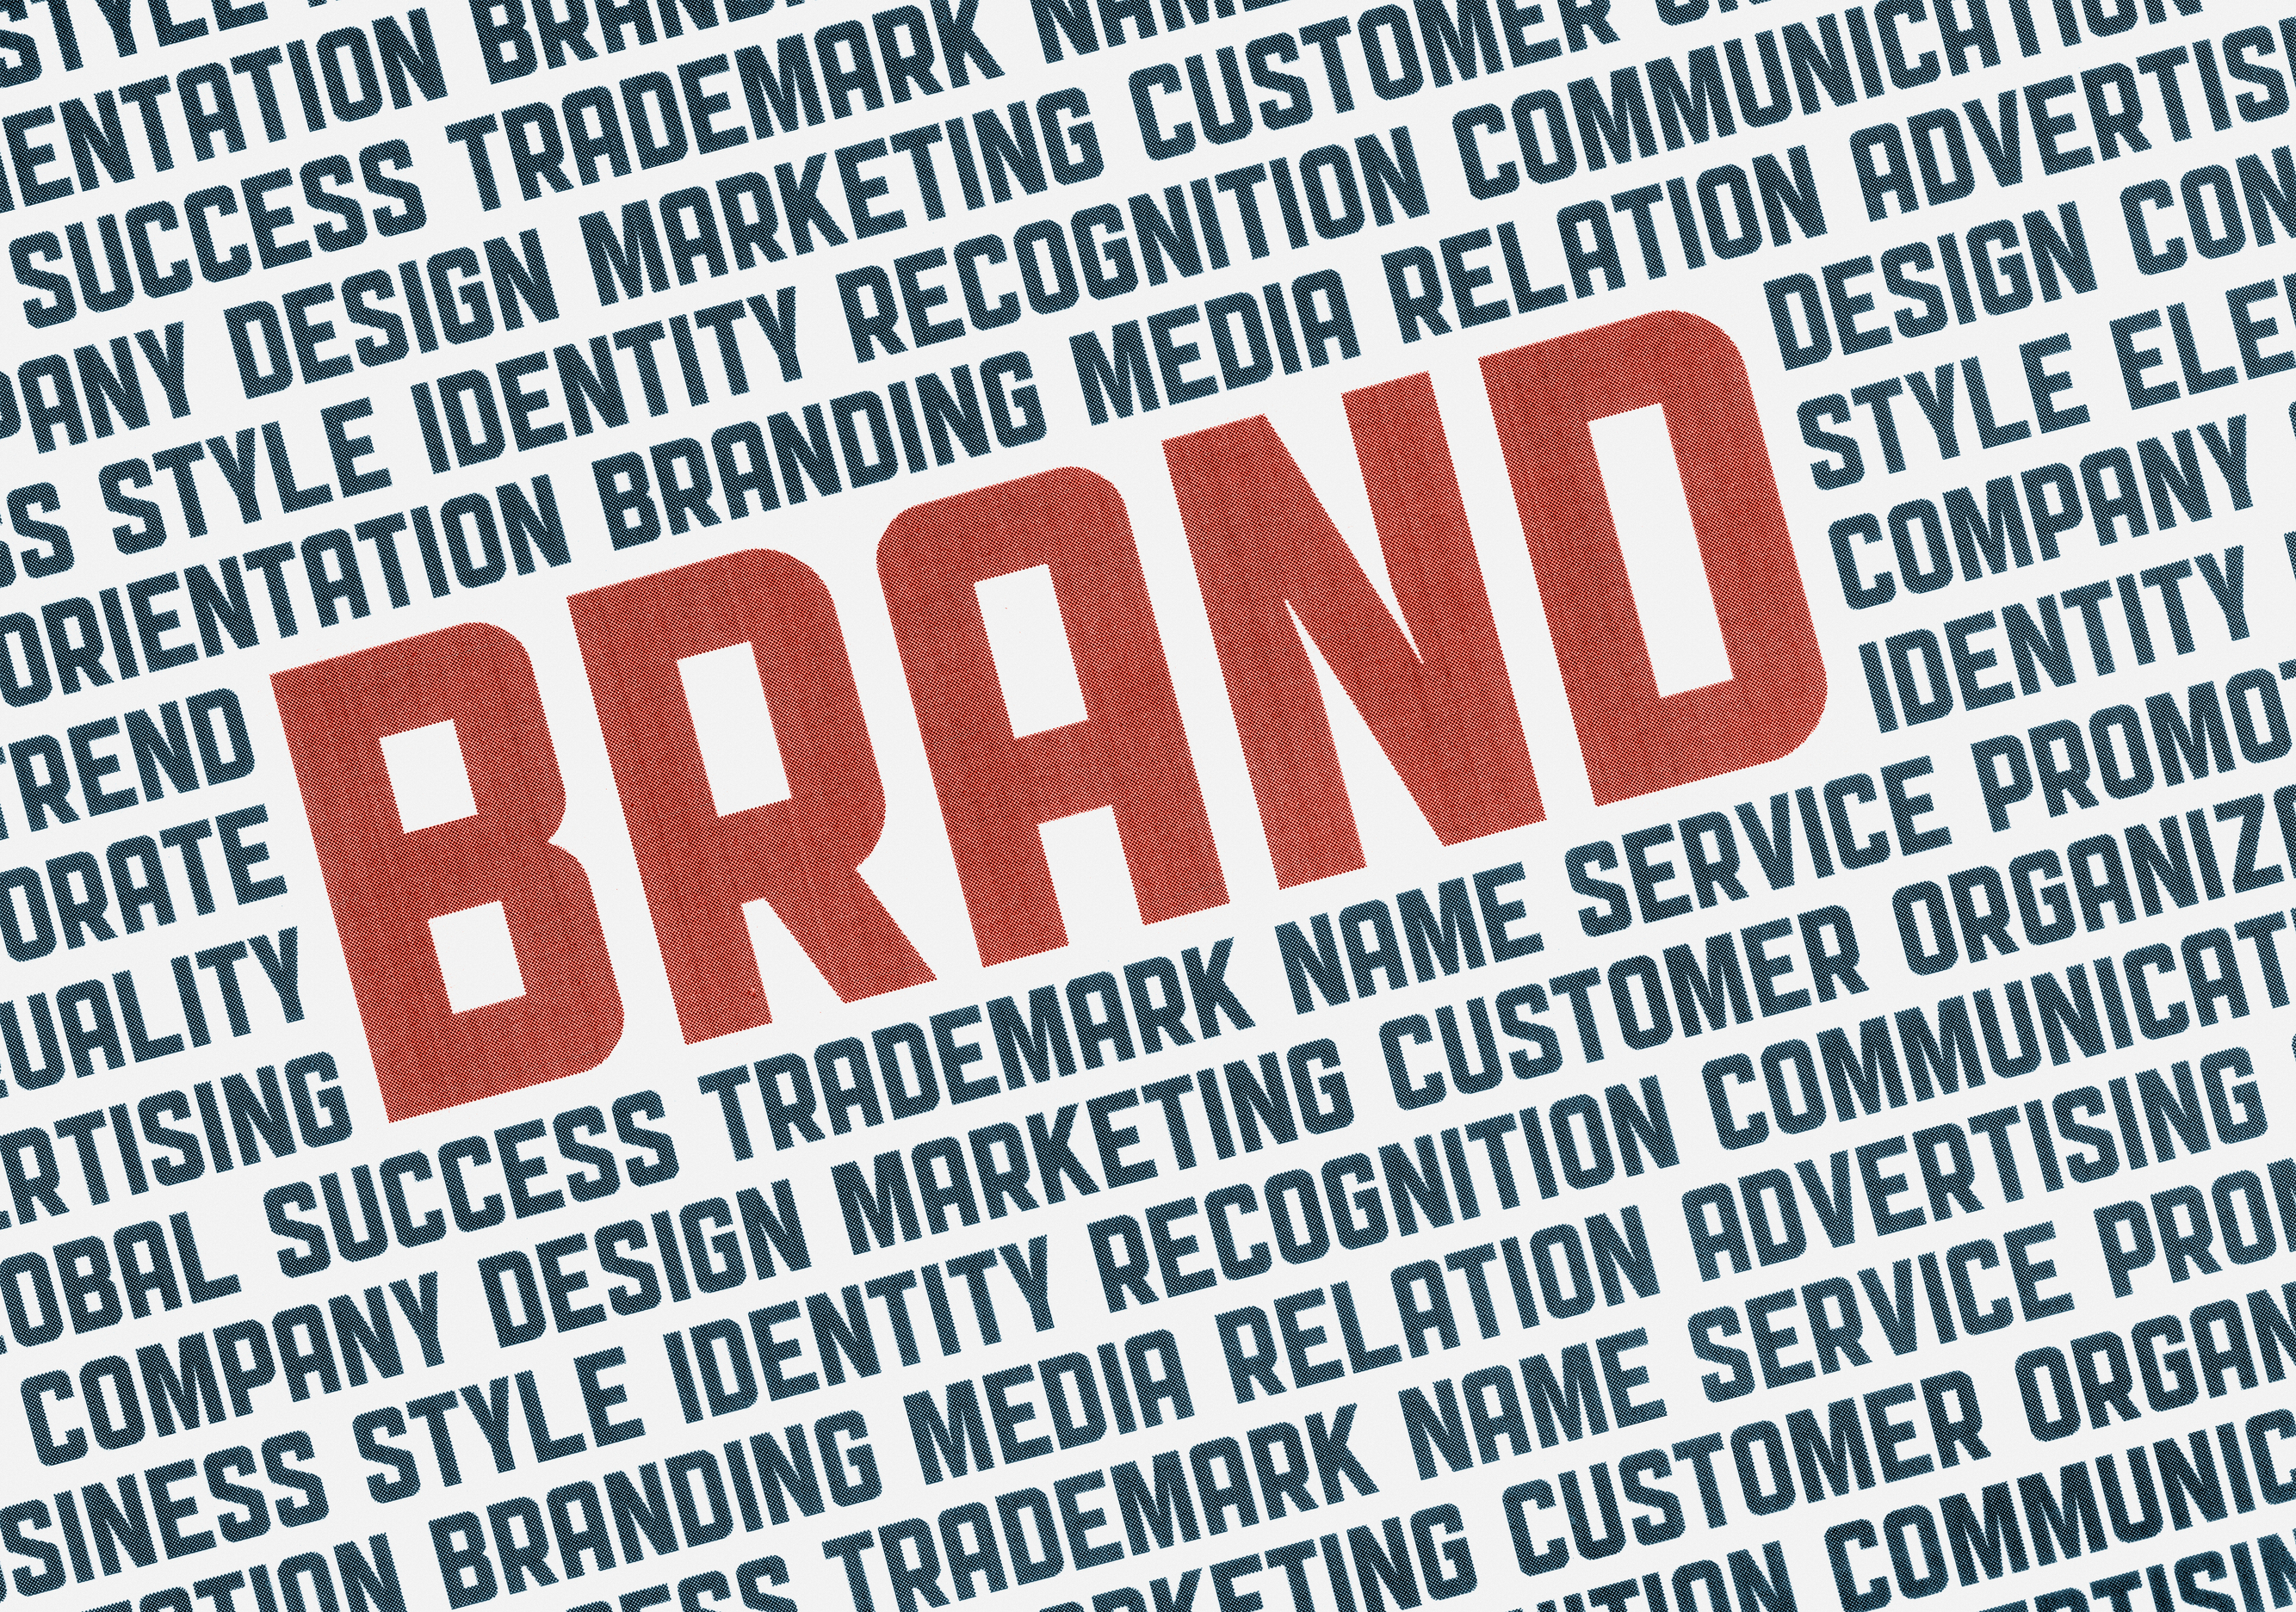 Best Practices for Branding and Marketing Your Restaurant Webinar